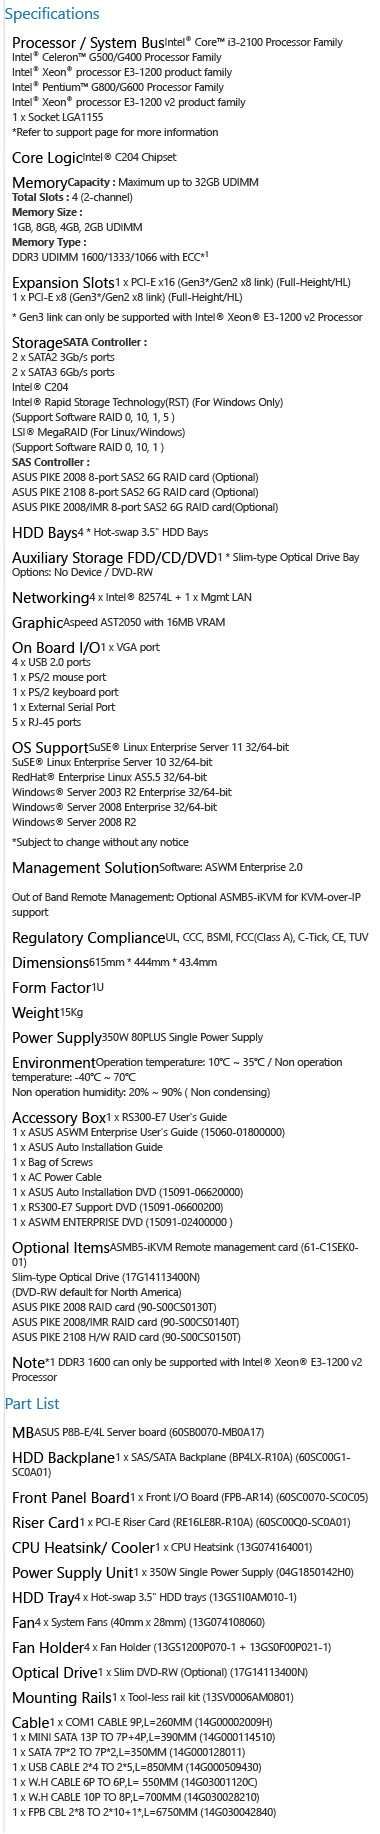 Сервер Asus RS300-E7/PS4 (б/у)